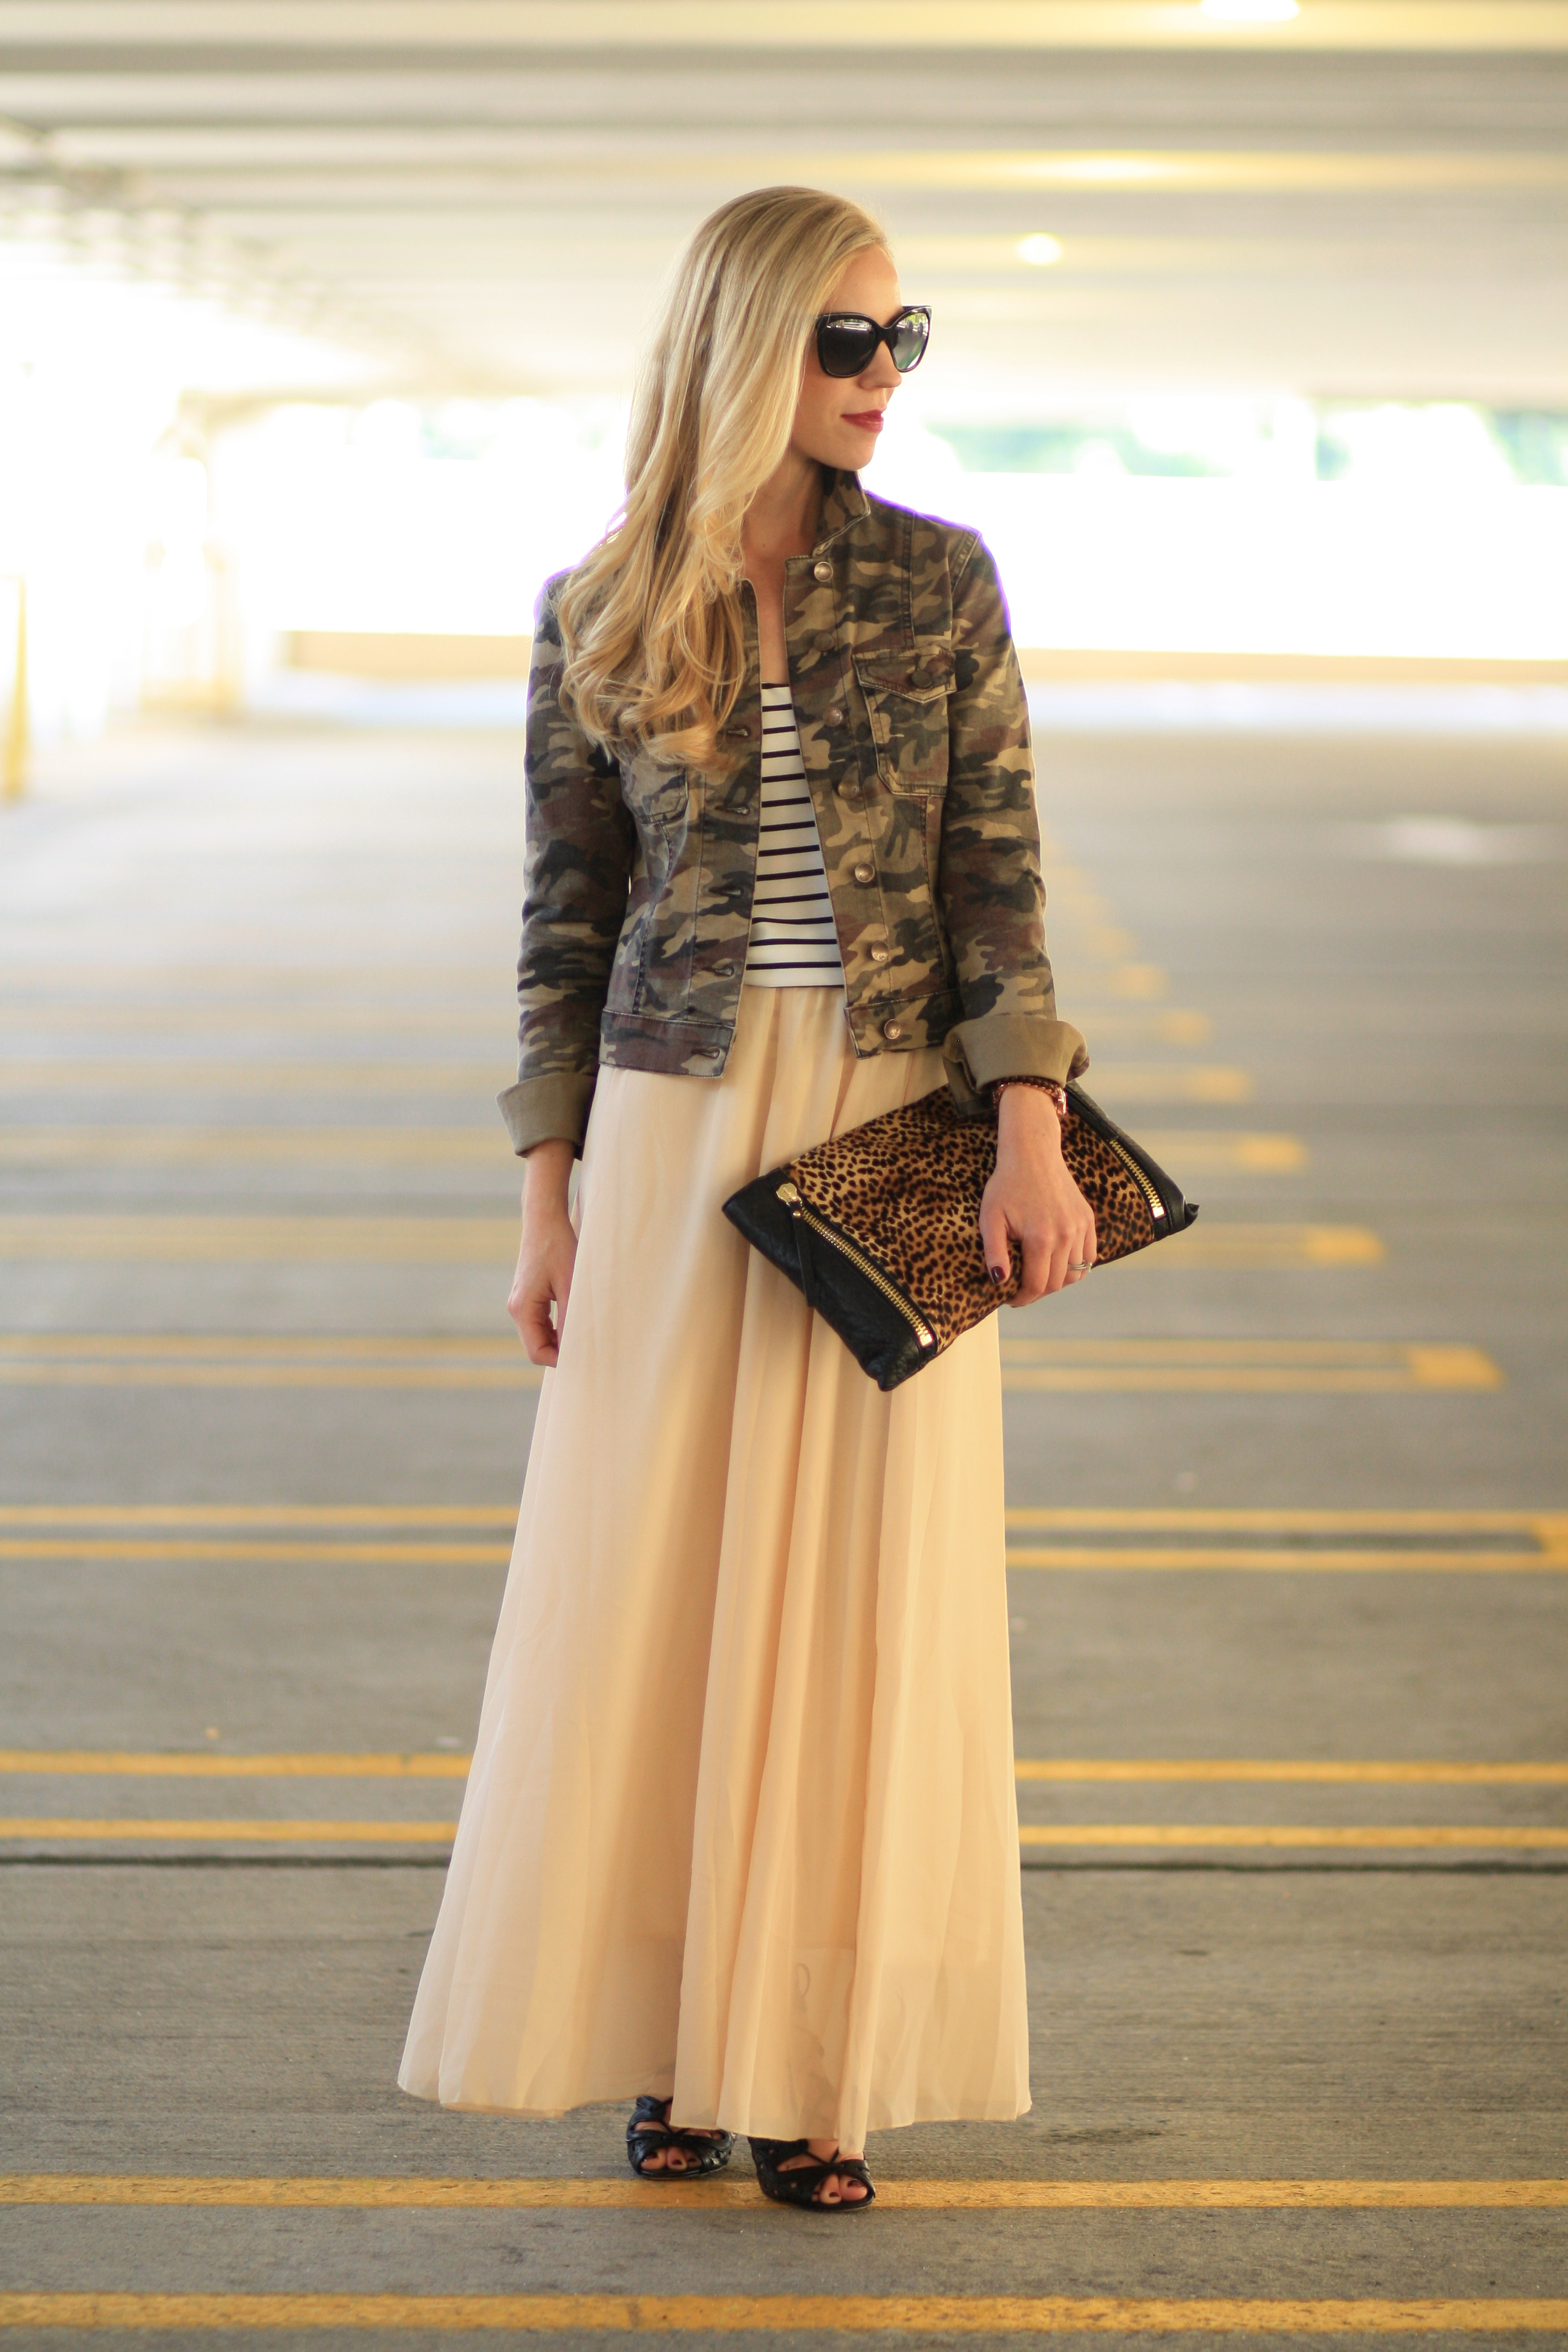 { Pattern Trio: Camo jacket, Striped tank, Pleated maxi skirt & Leopard